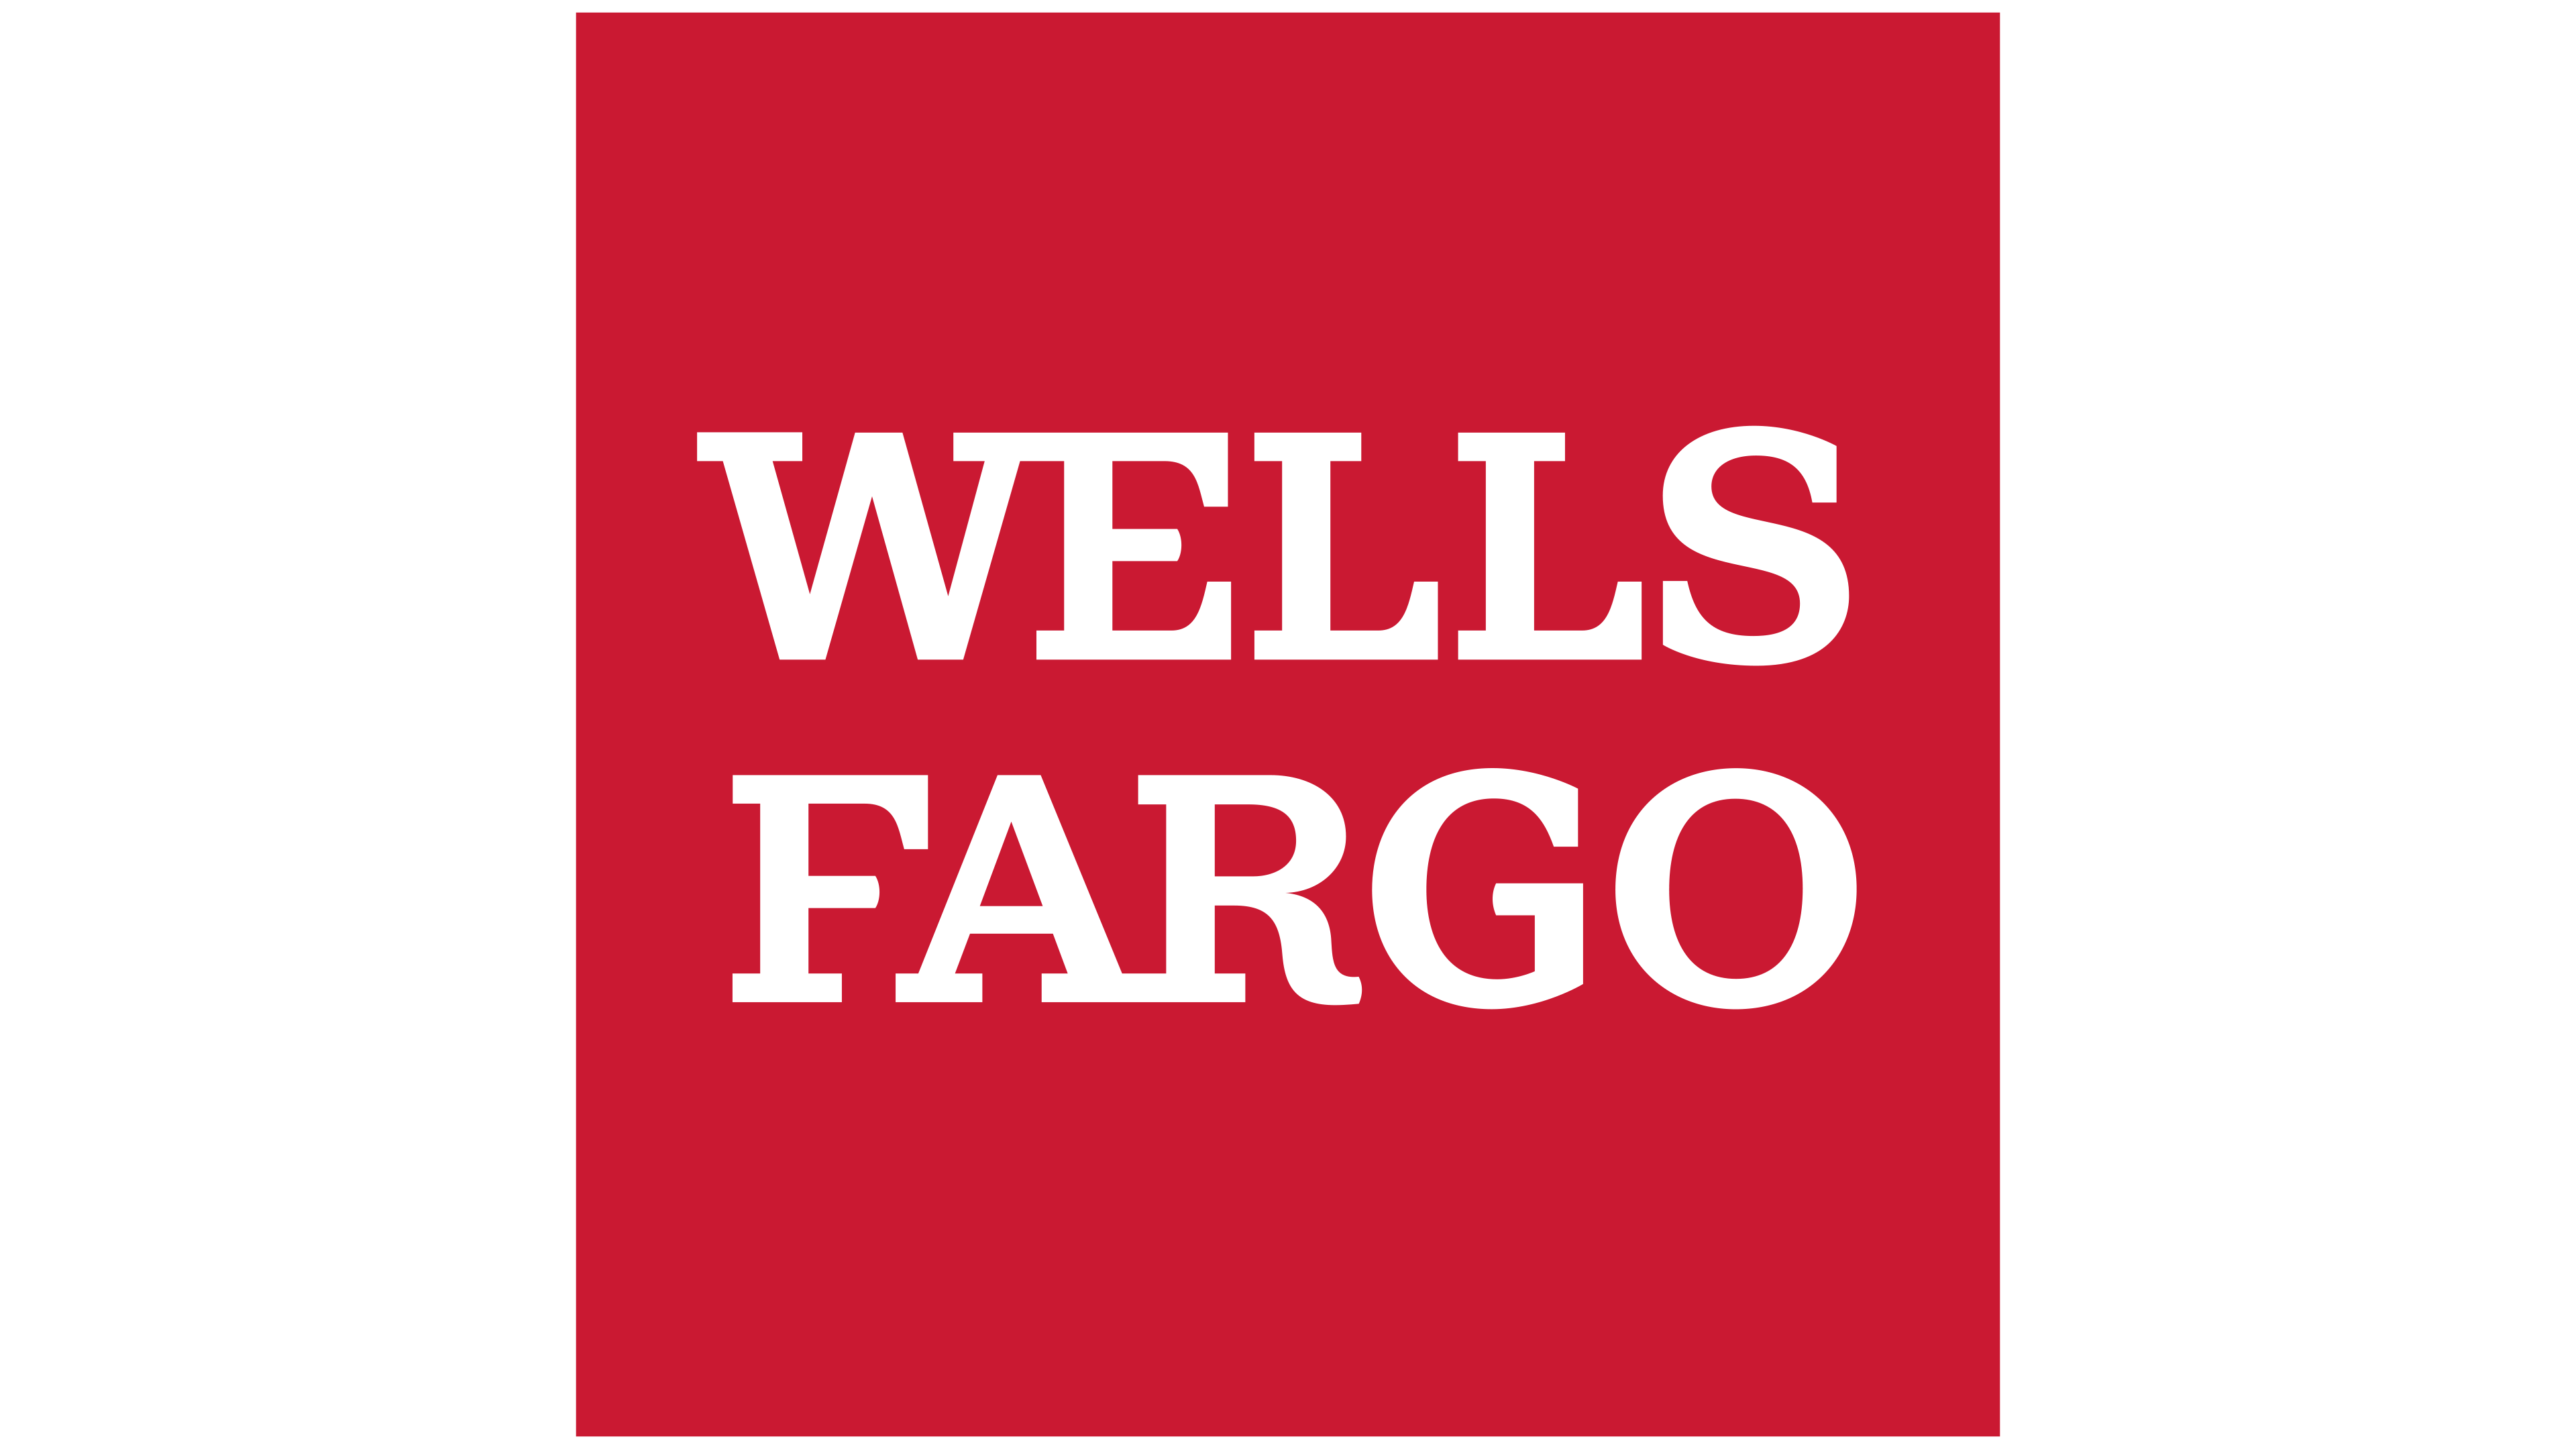 Wells-Fargo-Logo